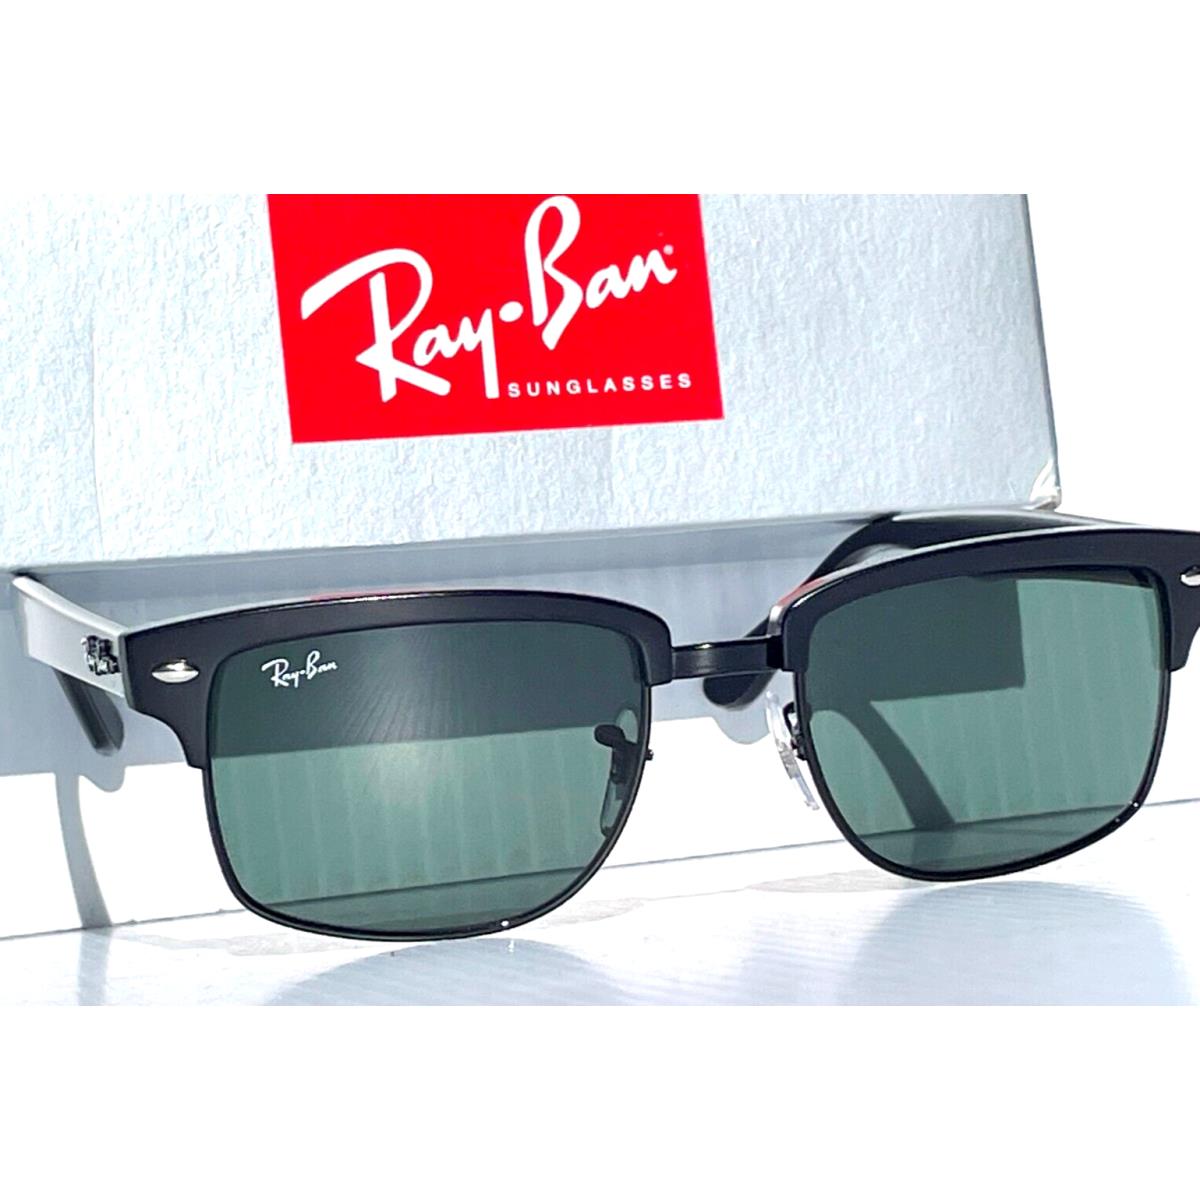 Ray Ban Clubmaster Gloss Black Frame Crystal Green Lens Sunglass RB 4190 877